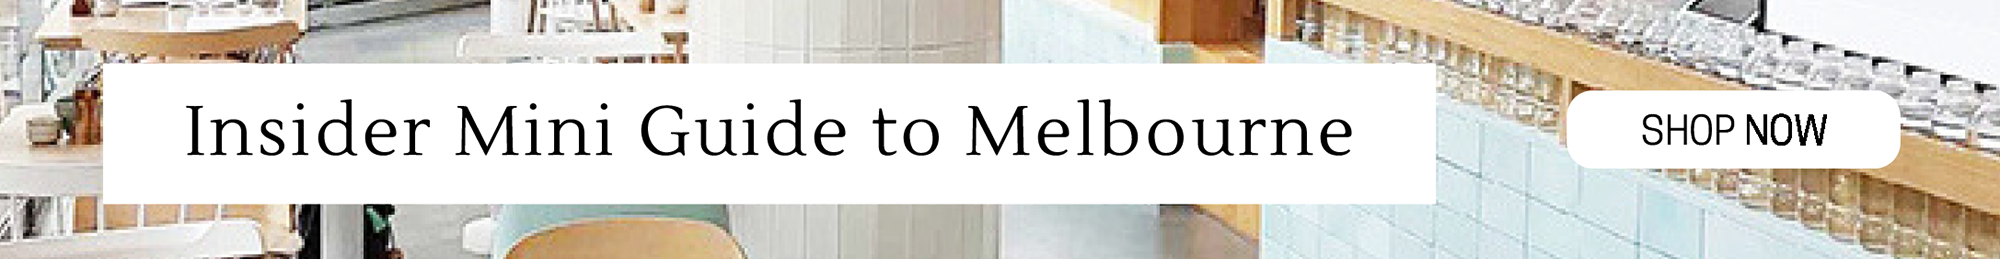 Insider mini guides to Melbourne